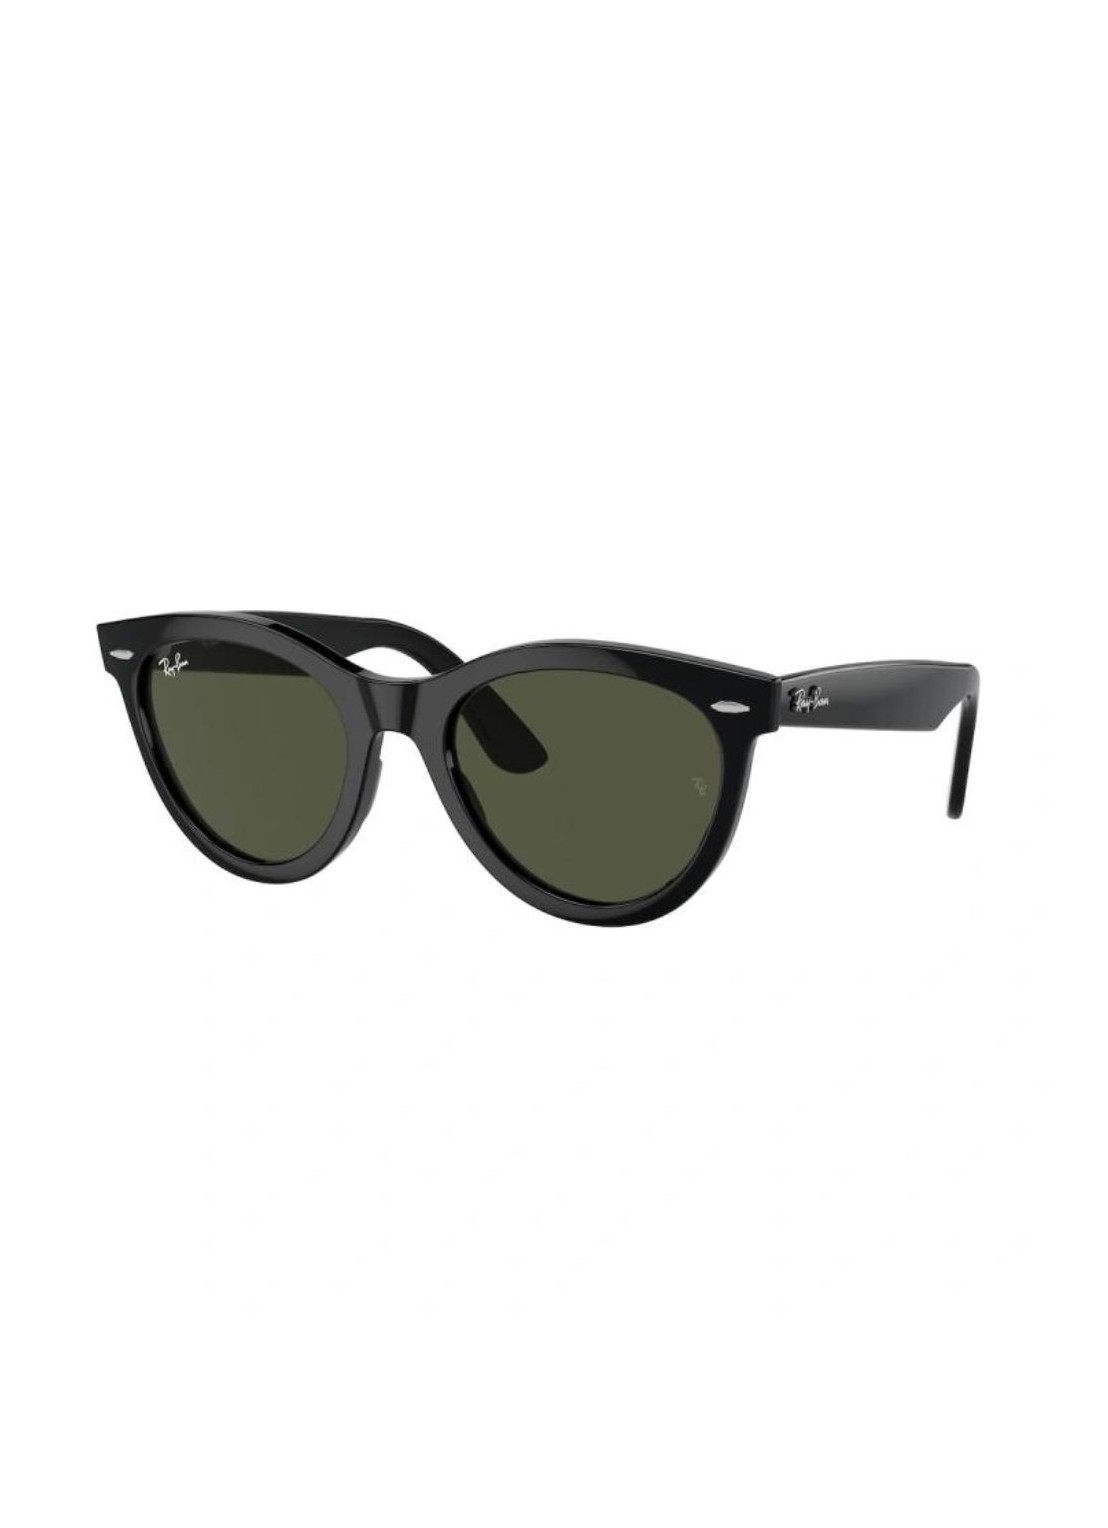 Gafas rayban sunglasses unisex0rb2241 - 0rb2241 901/31 talla transparente
 